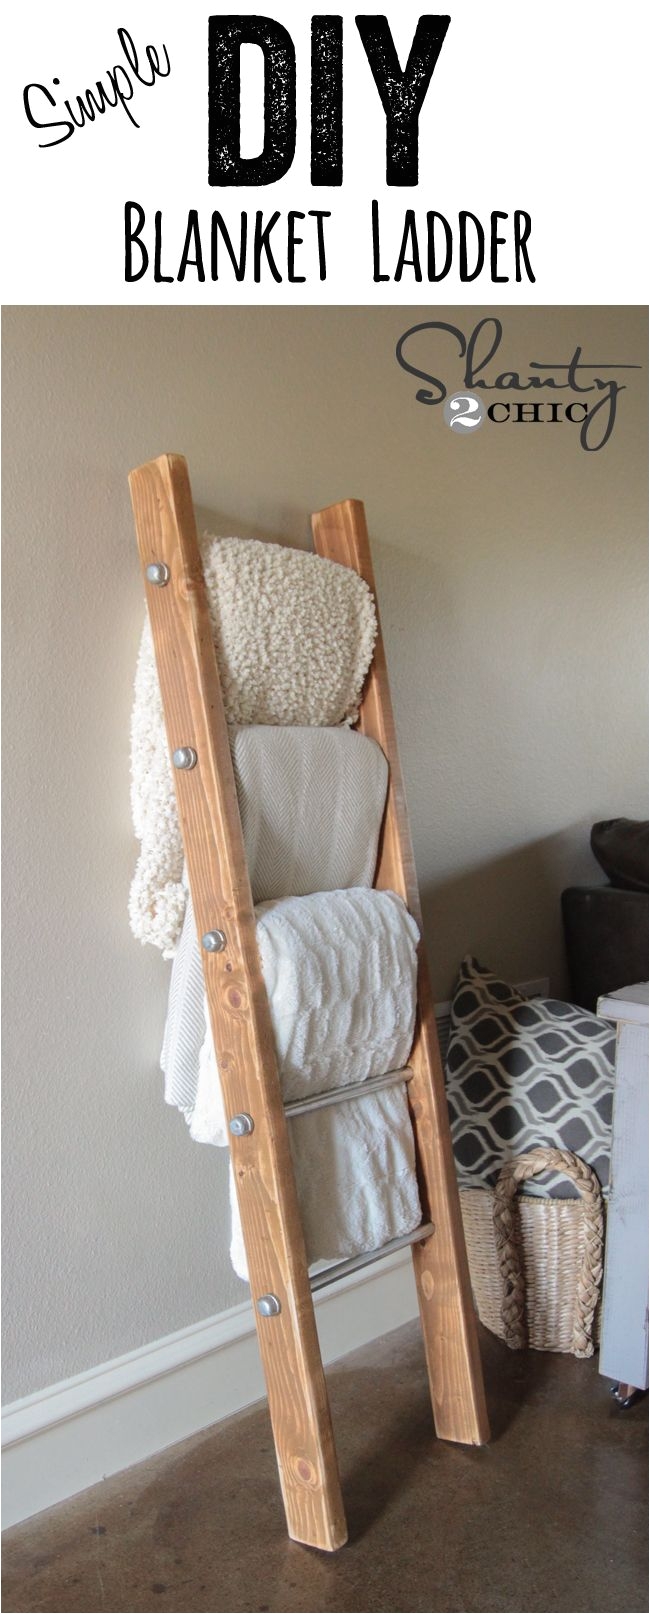 White Wooden Blanket Rack Diy Wood and Metal Pipe Blanket Ladder Pinterest Blanket Ladder